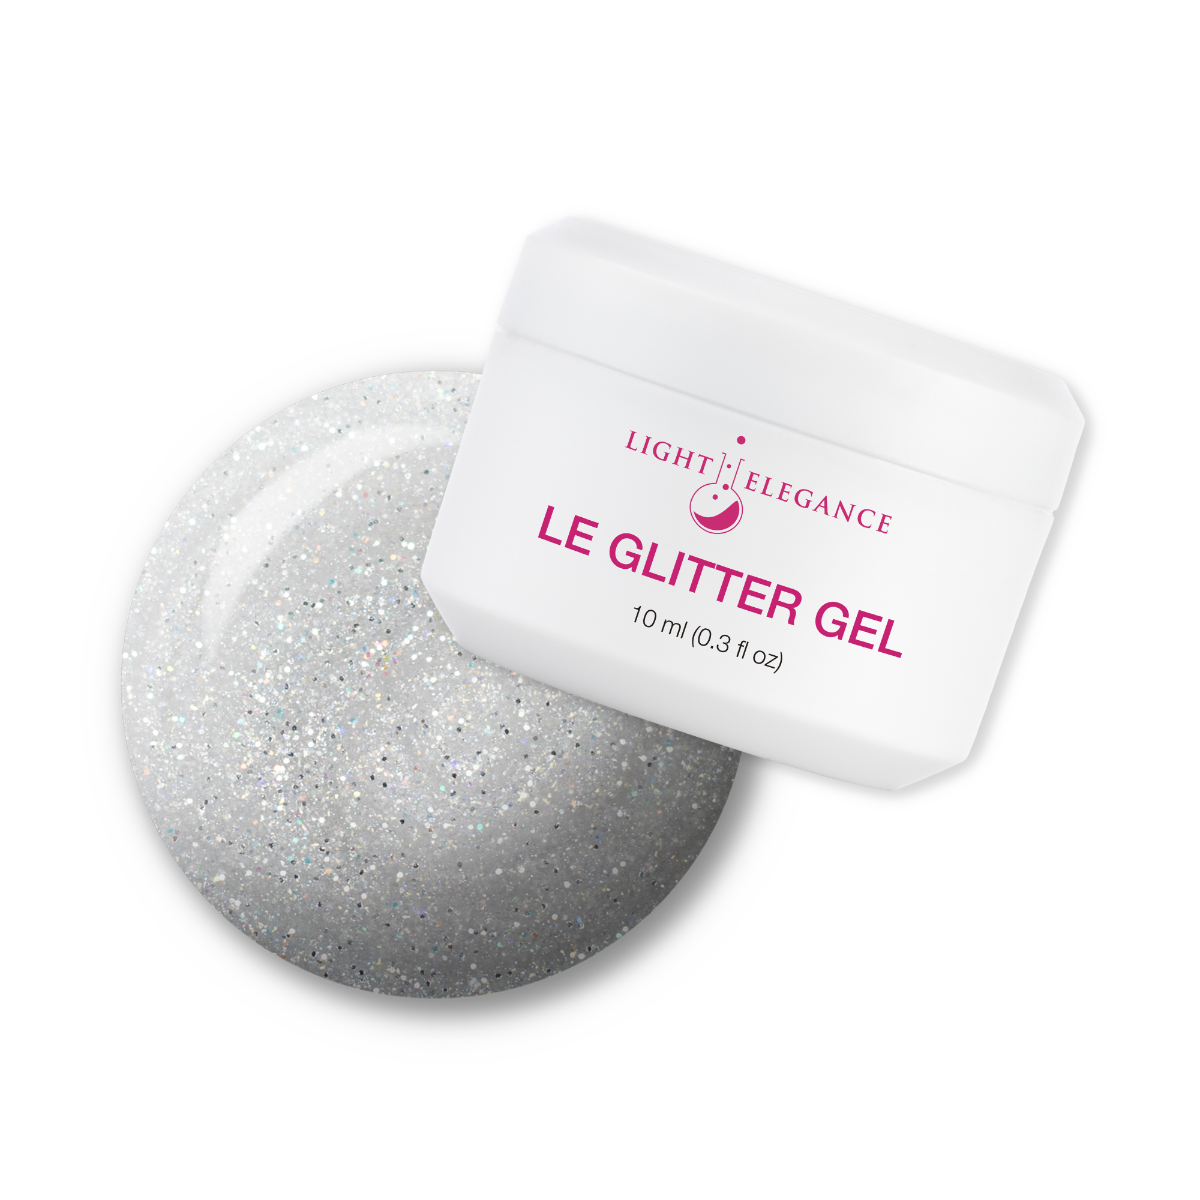 Light Elegance Glitter Gel - Tiny Diamond :: New Packaging - Creata Beauty - Professional Beauty Products